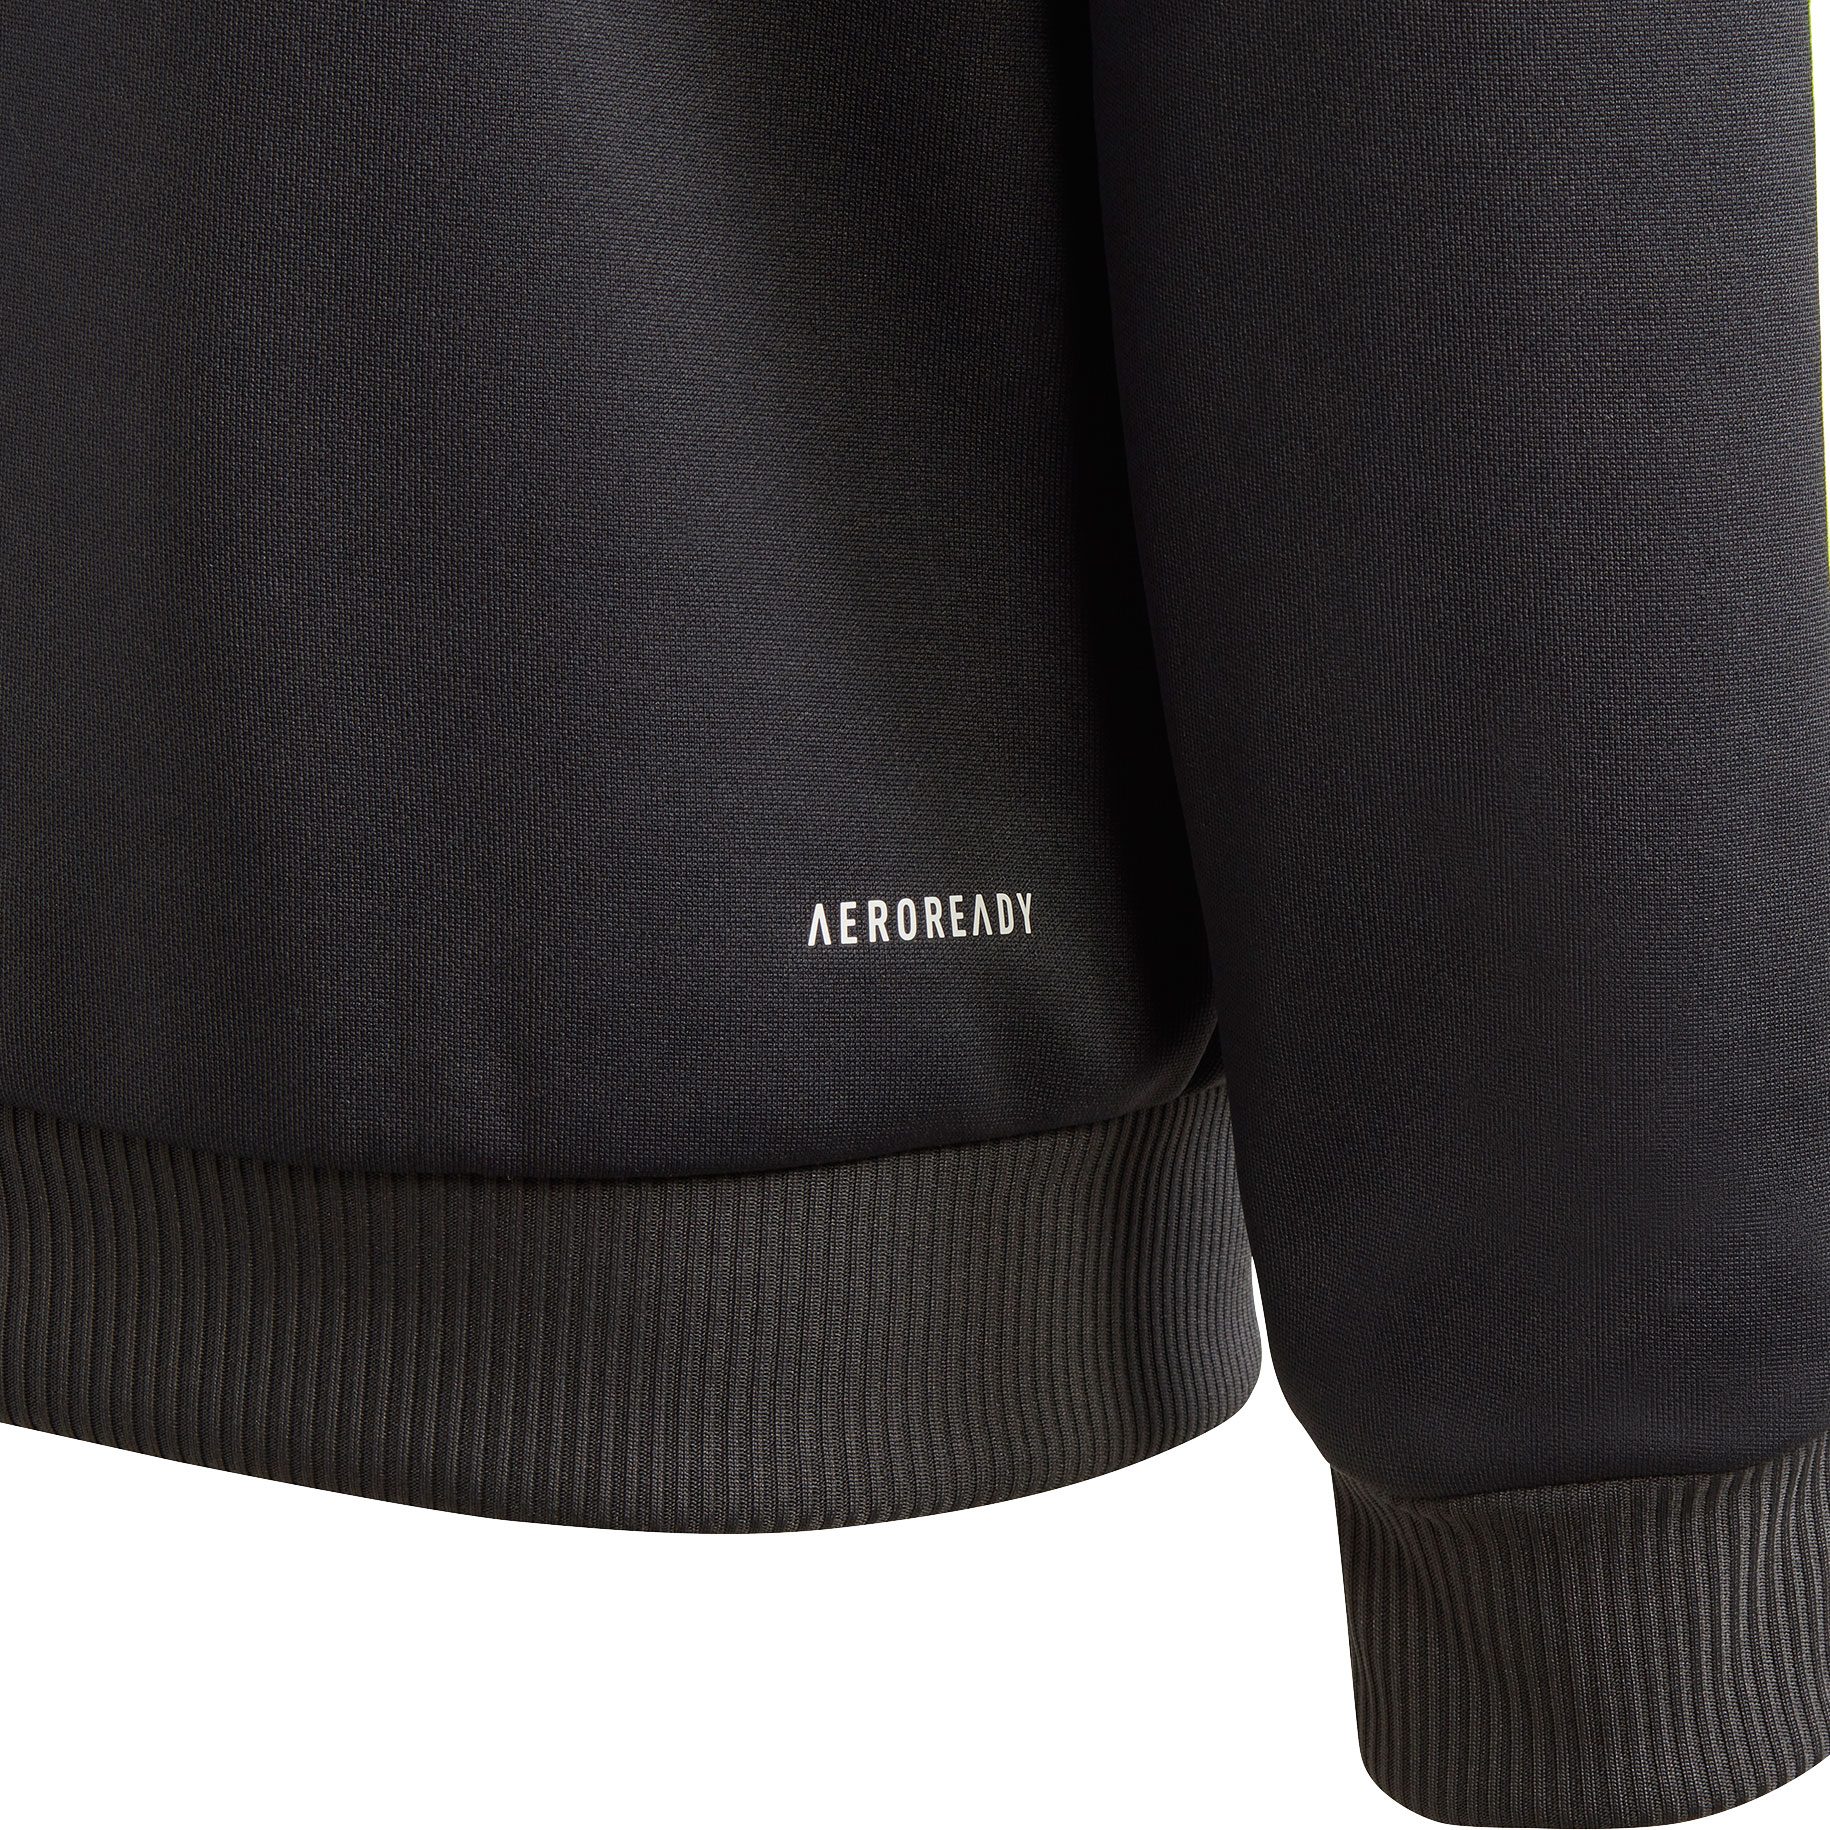 Shop Train Boys Essentials 3-Stripes Hooded Aeroready at adidas - Jacket carbon Sport Bittl